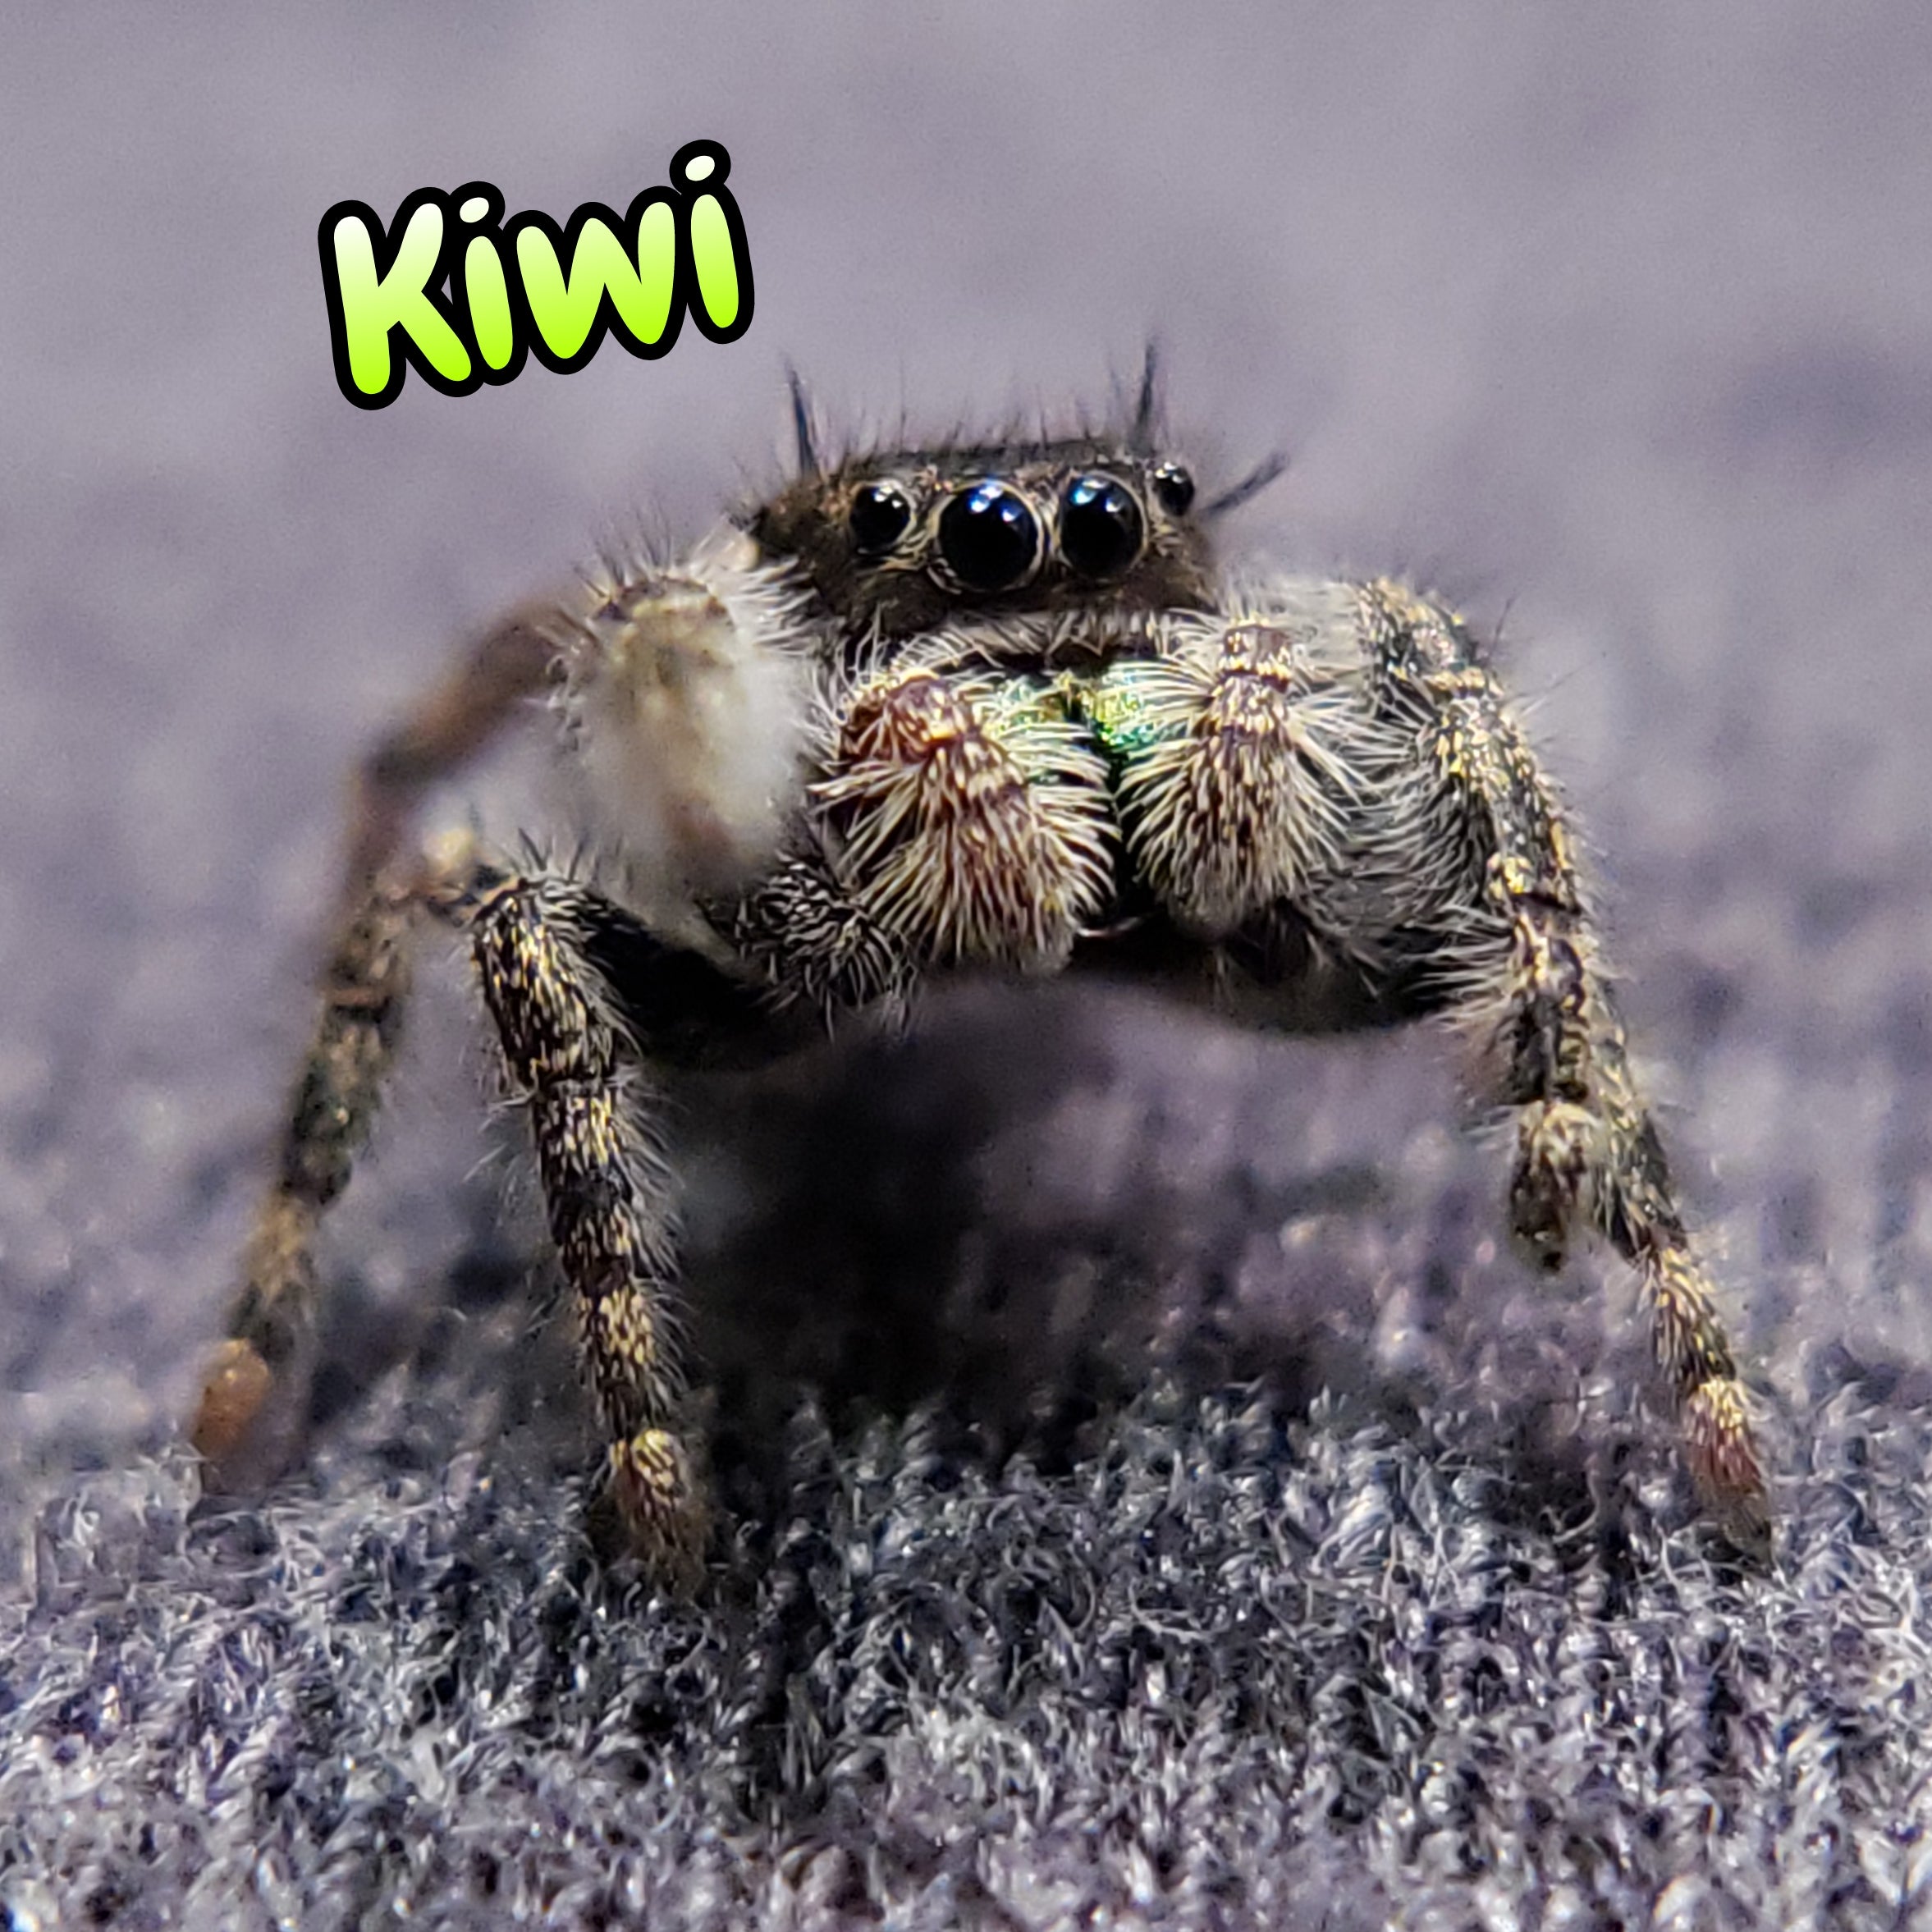 Regal Jumping Spider "Kiwi"